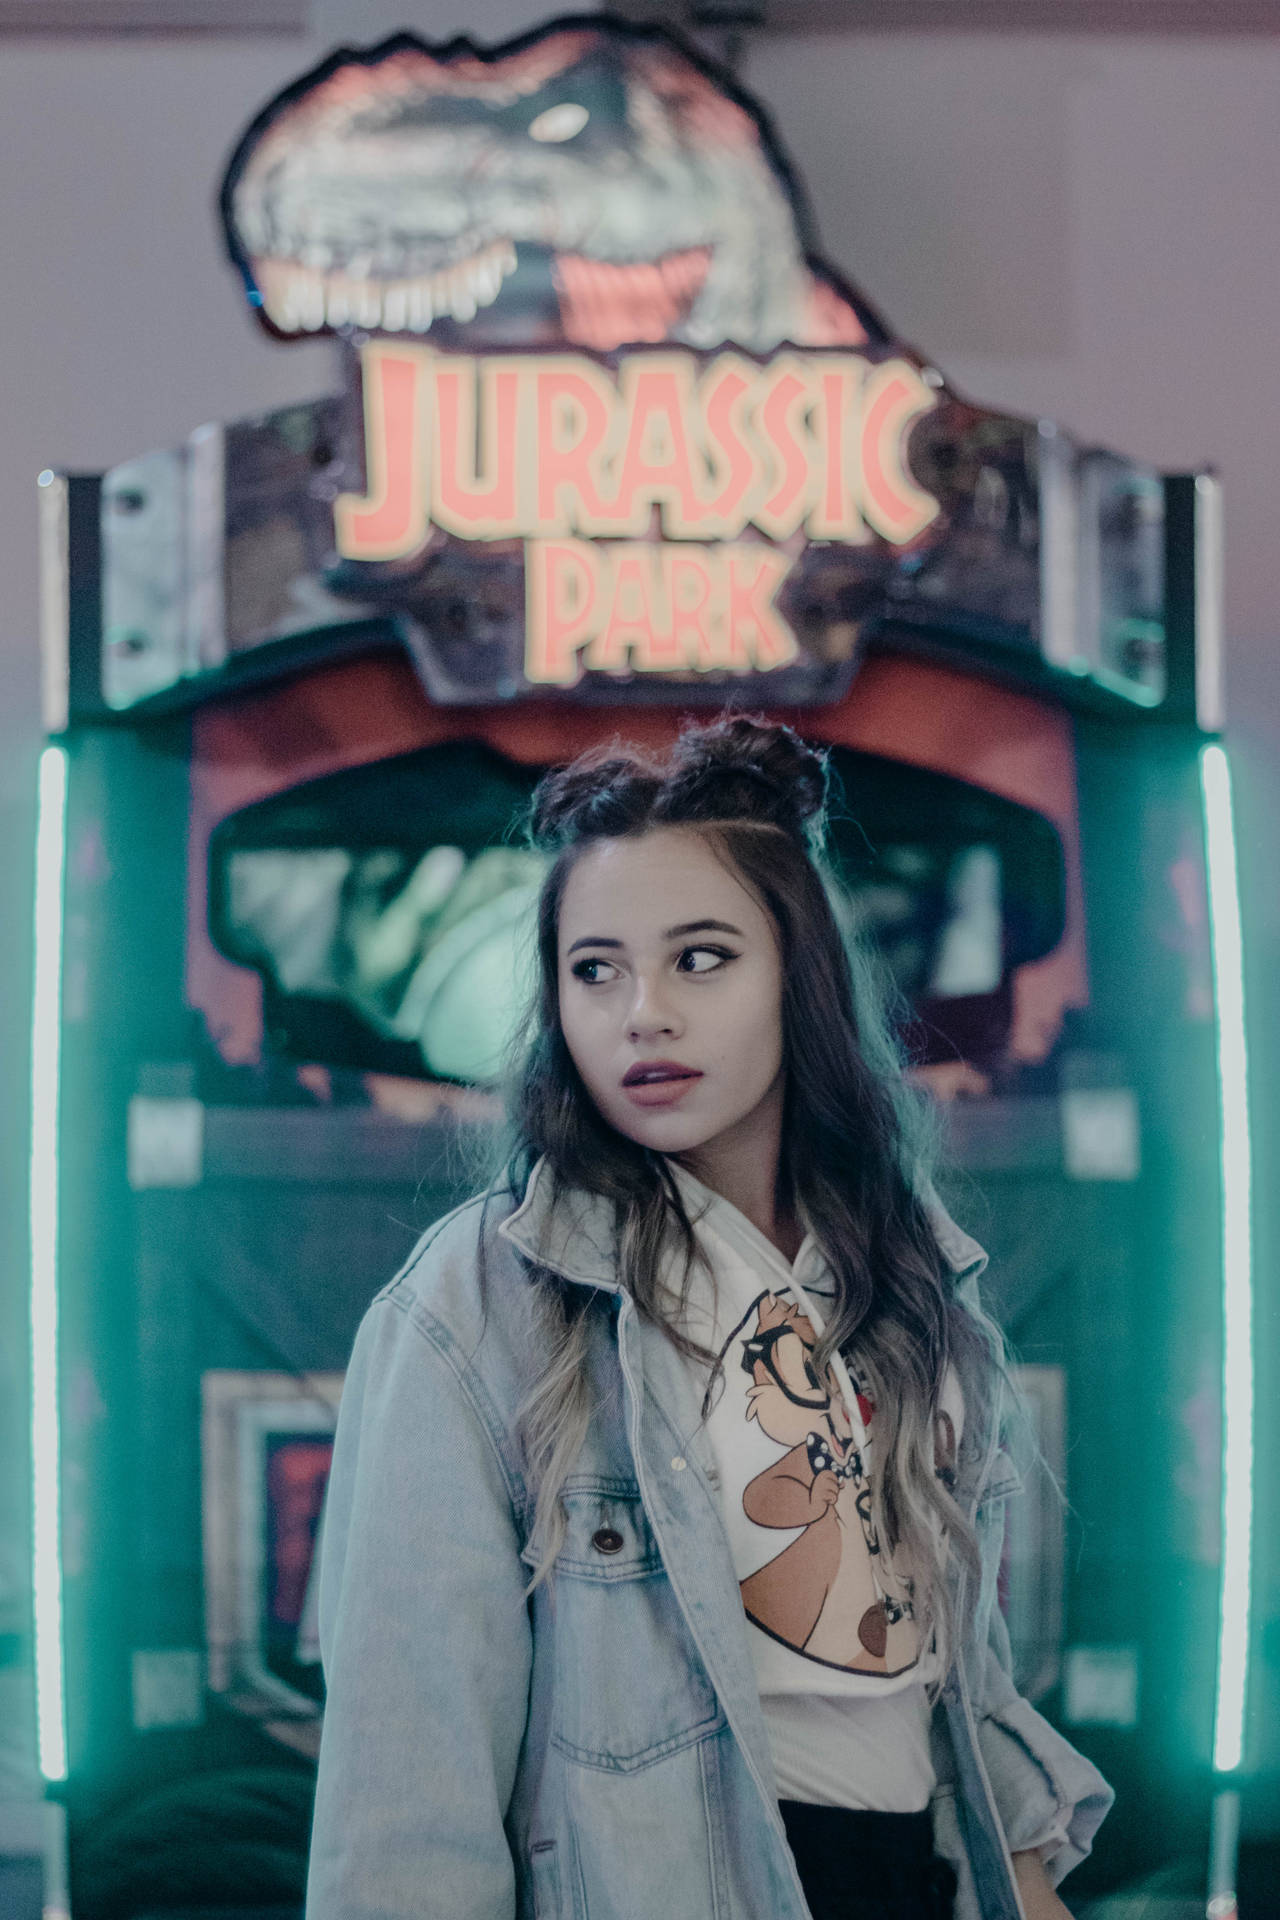 Cool Girl In Jurassic Park Arcade